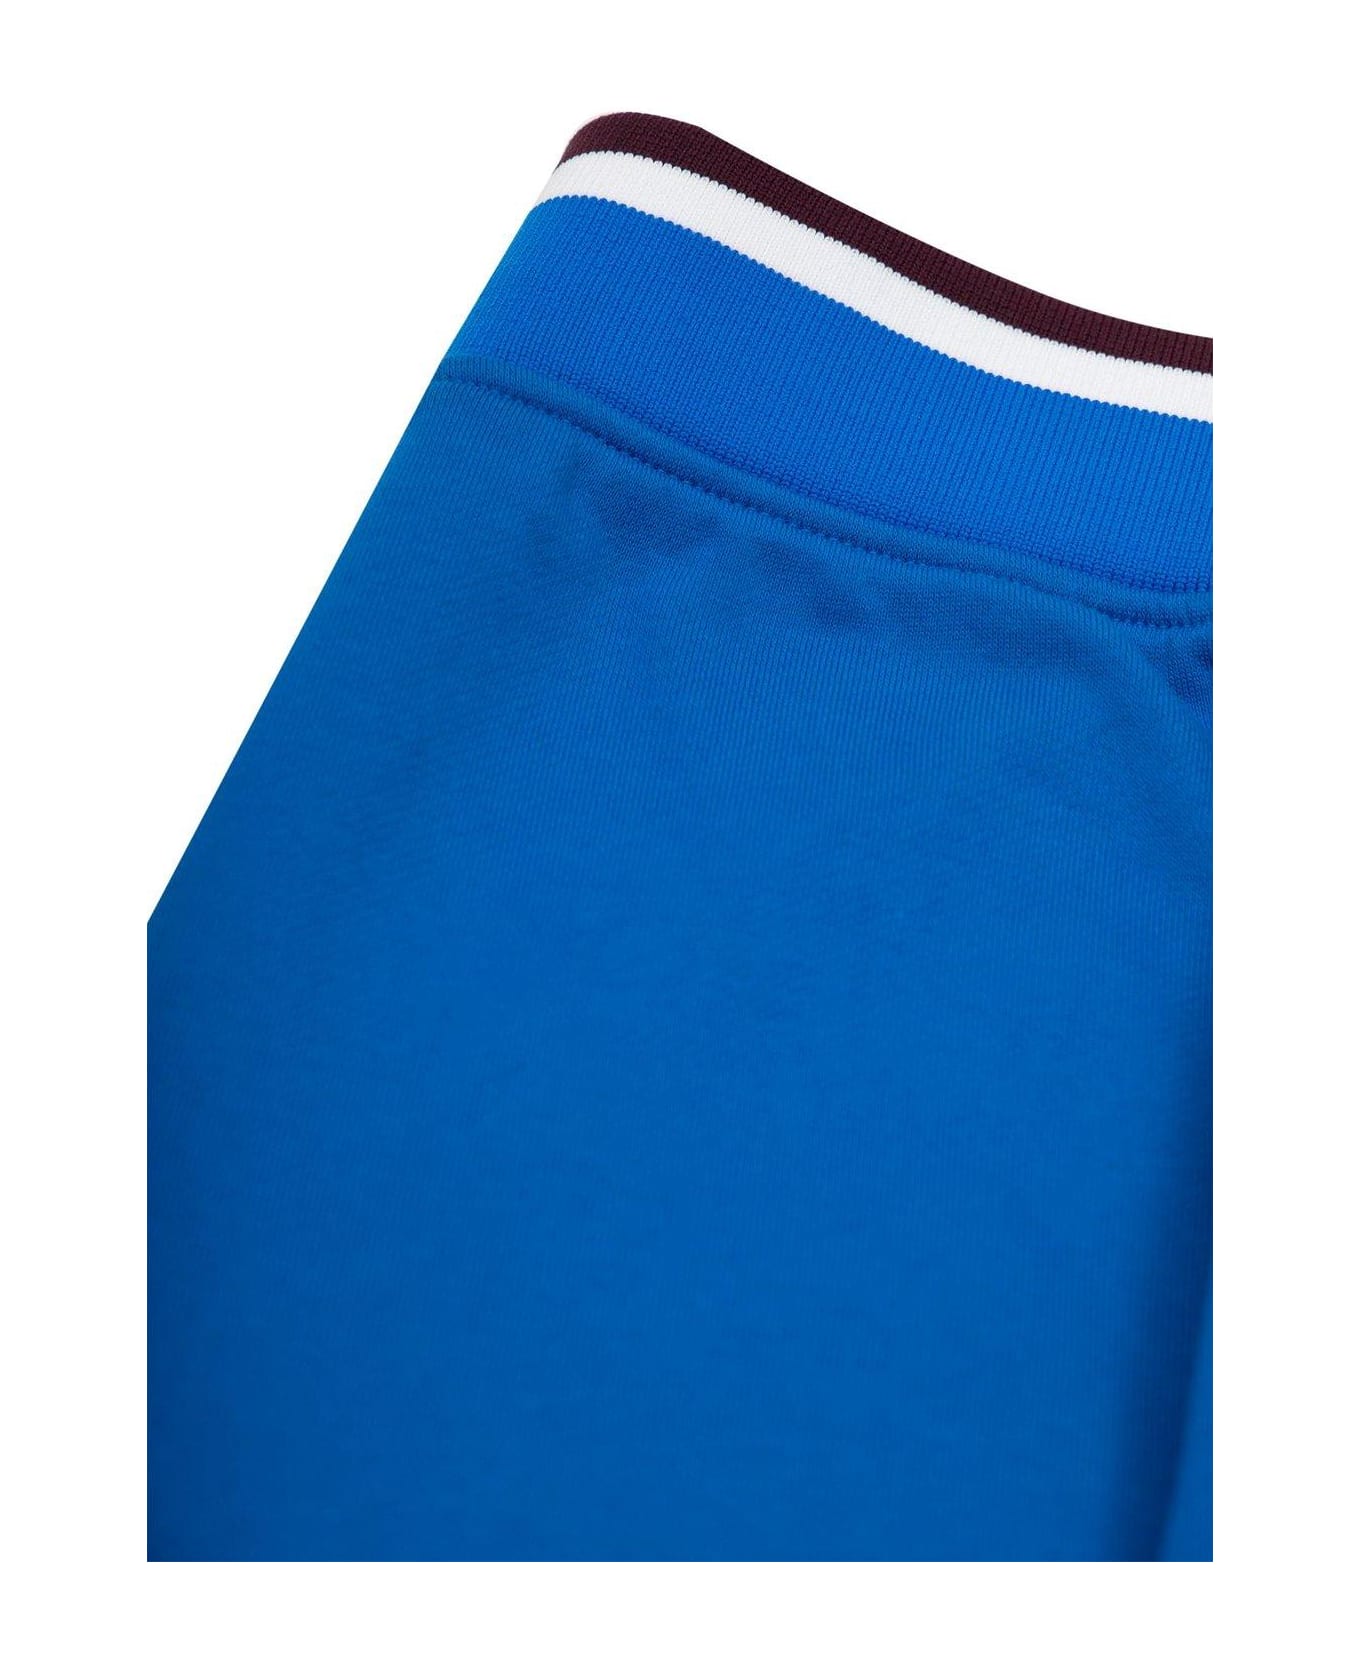 Burberry Logo Printed Sweatpants - BLUE